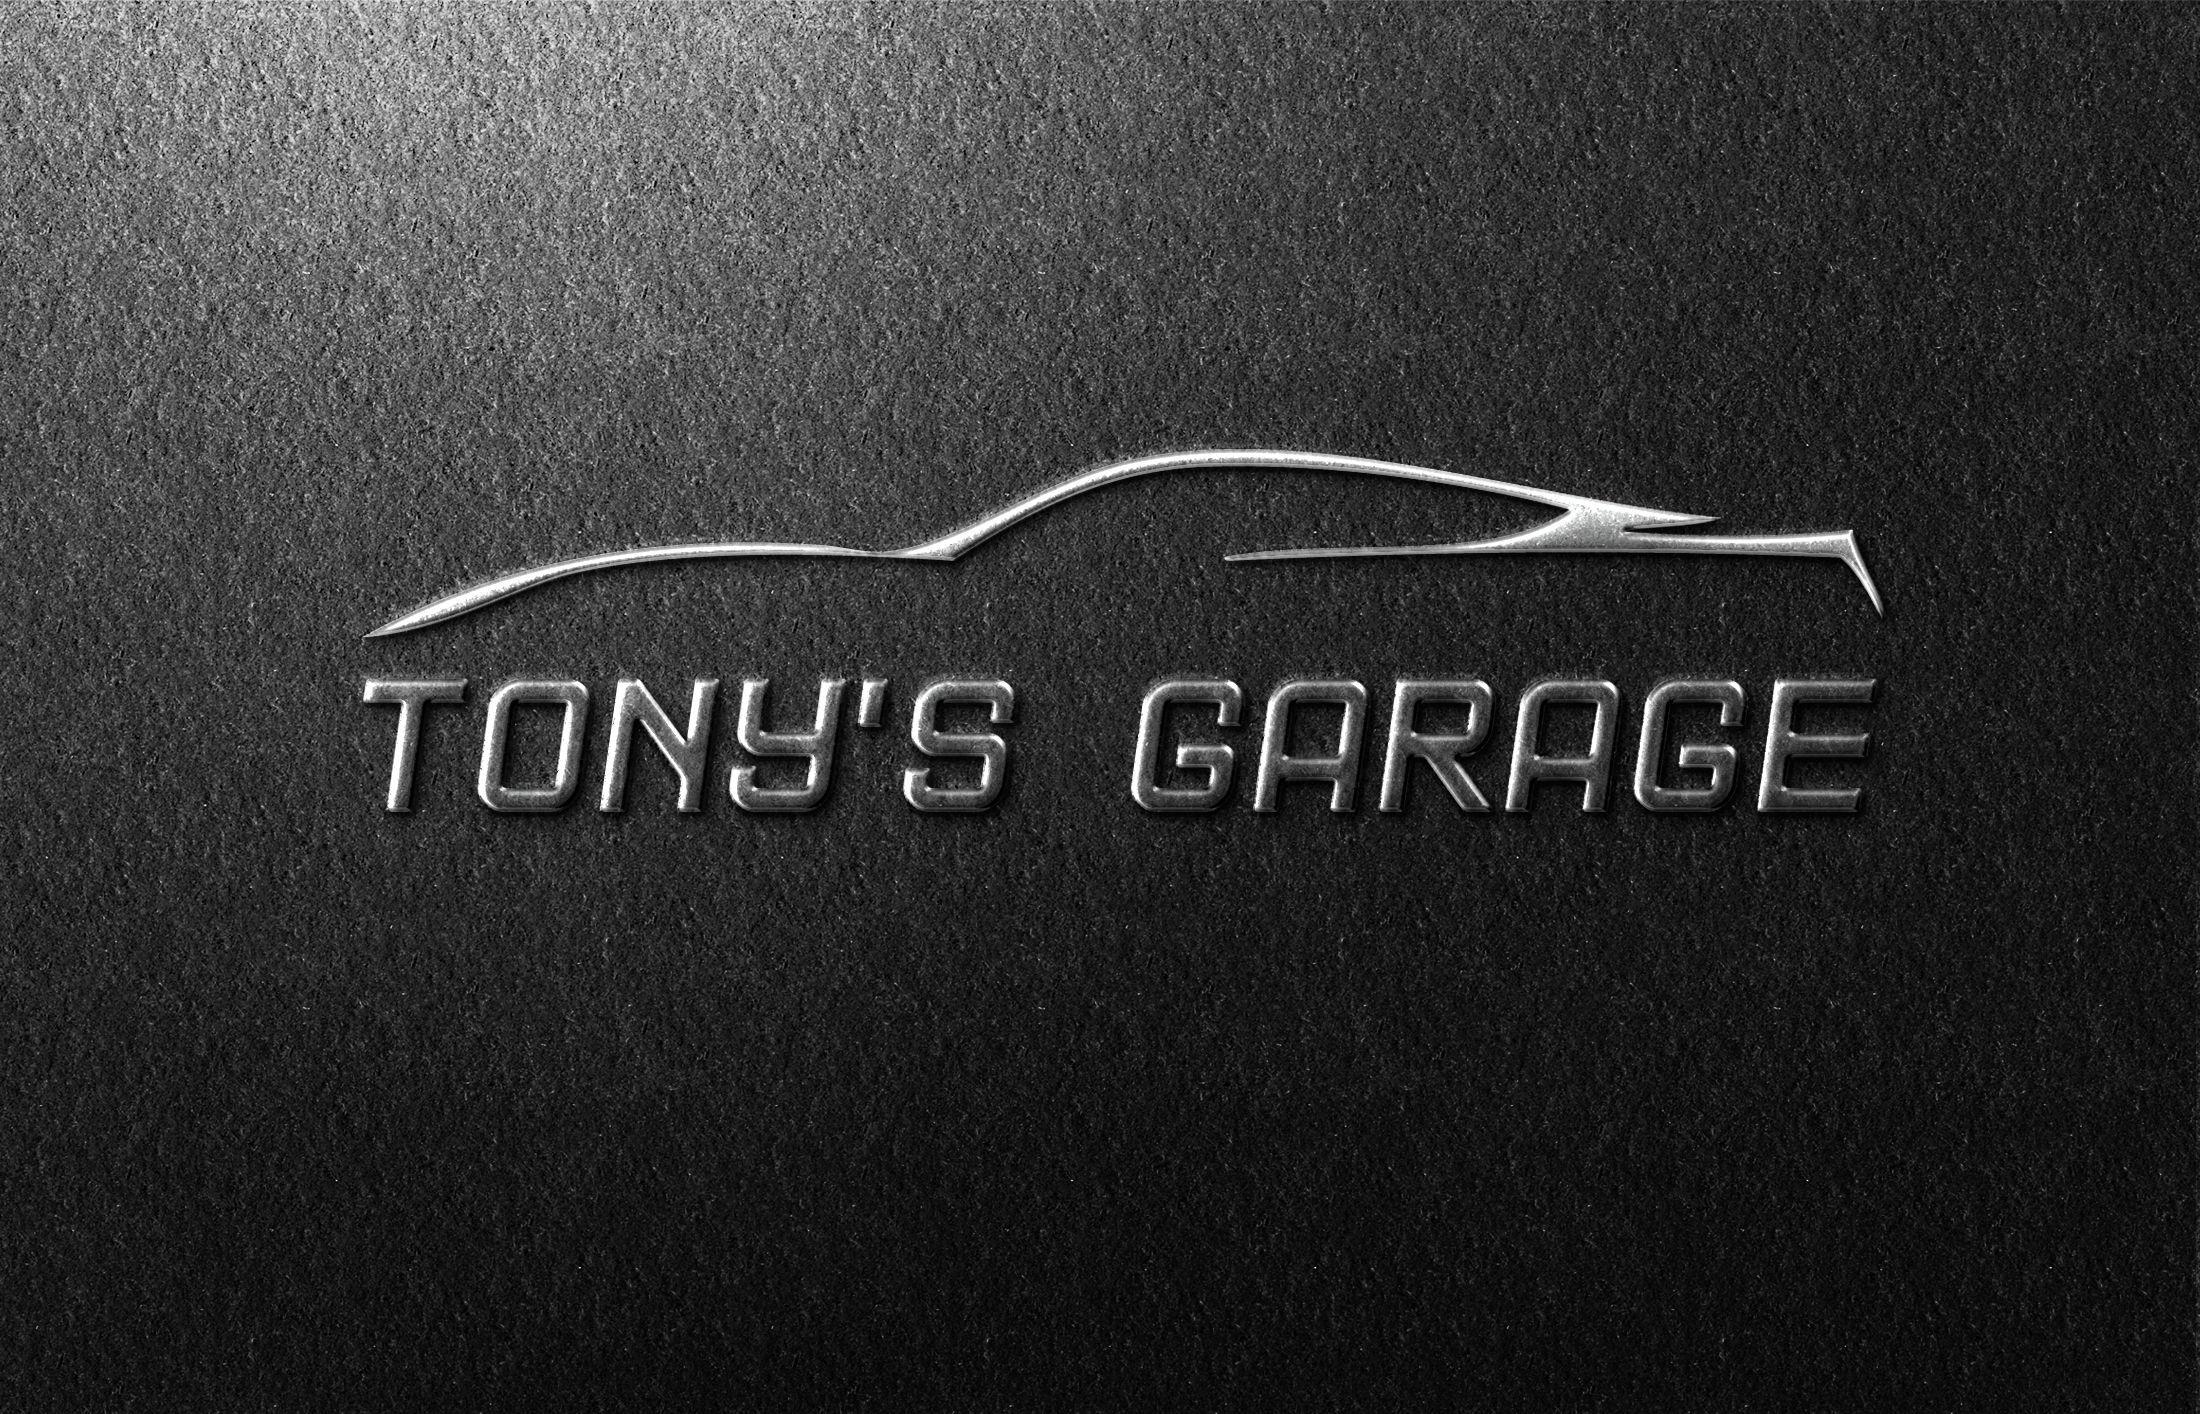 Auto Garage Logo - Auto Garage Logo Design. Just need it to say George. Car Garages